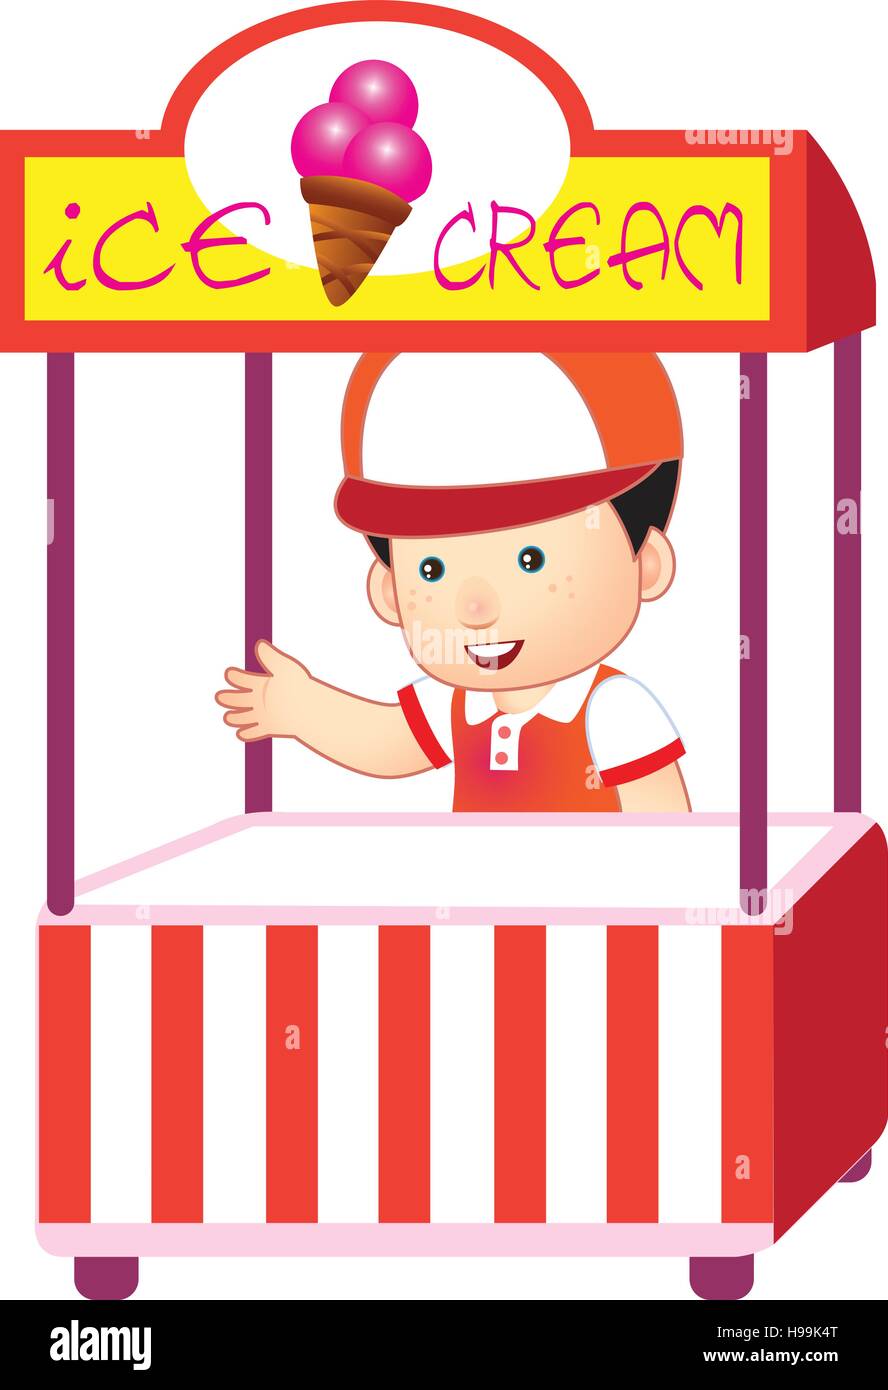 Vector illustration of Ice scream man Stock Vector